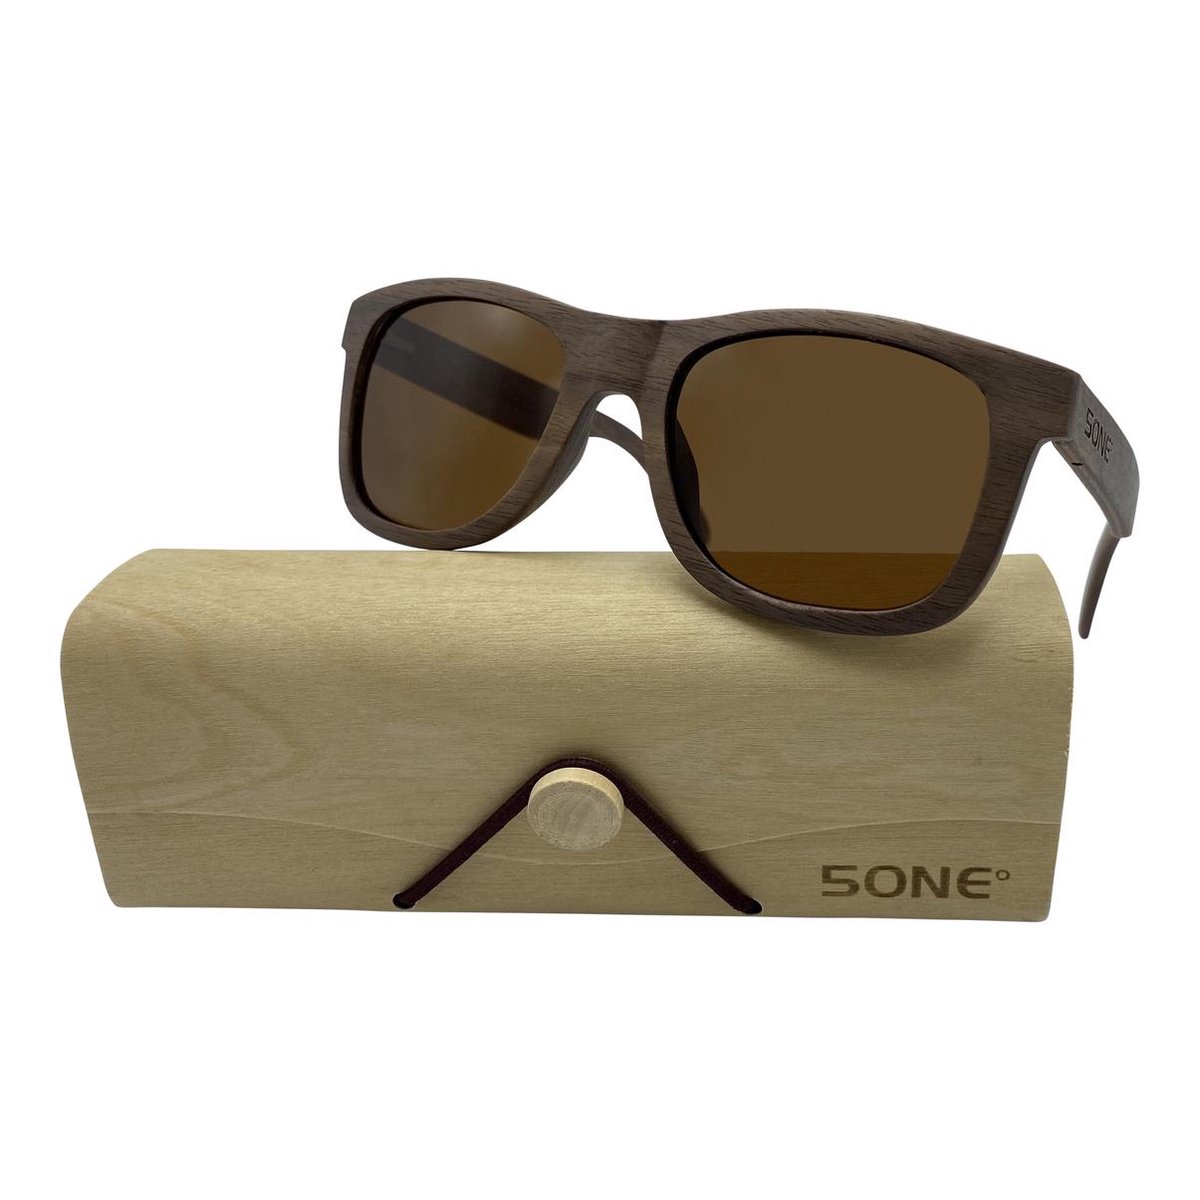 5one® Rome Kosso hout zonnebril met bruine lens - zonnebril voor dames